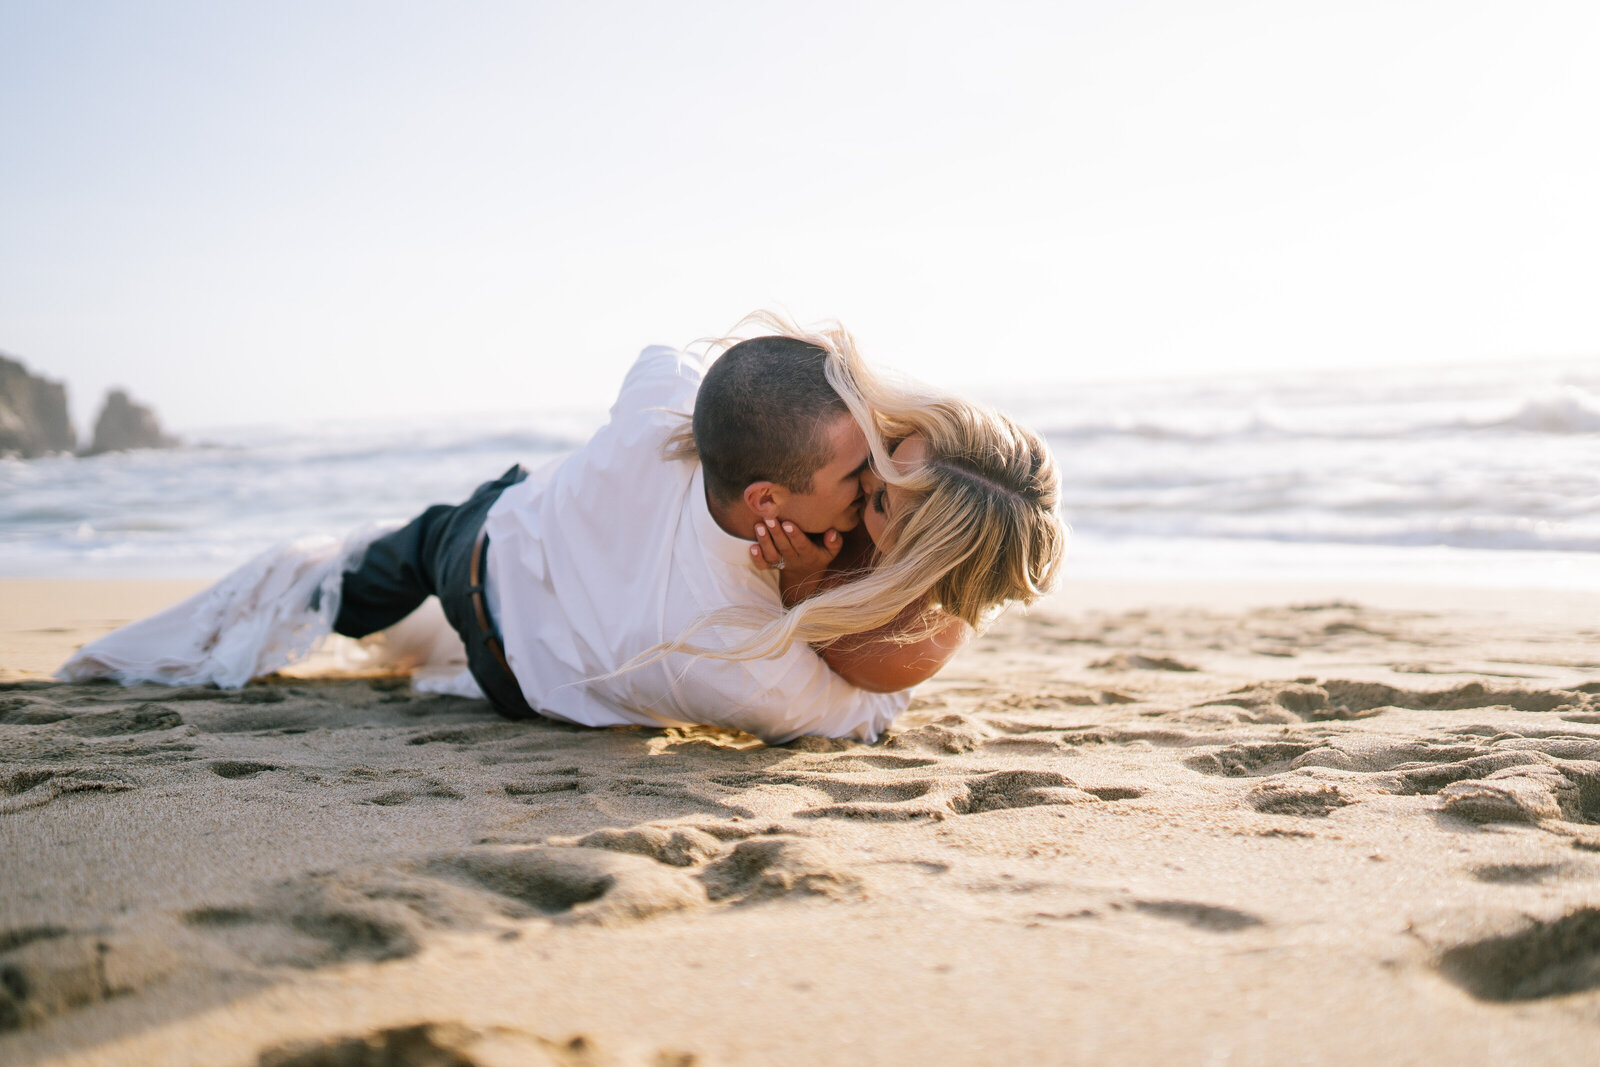 Sacramento Wedding Photographer captures couple rolling in sand after beach wedding